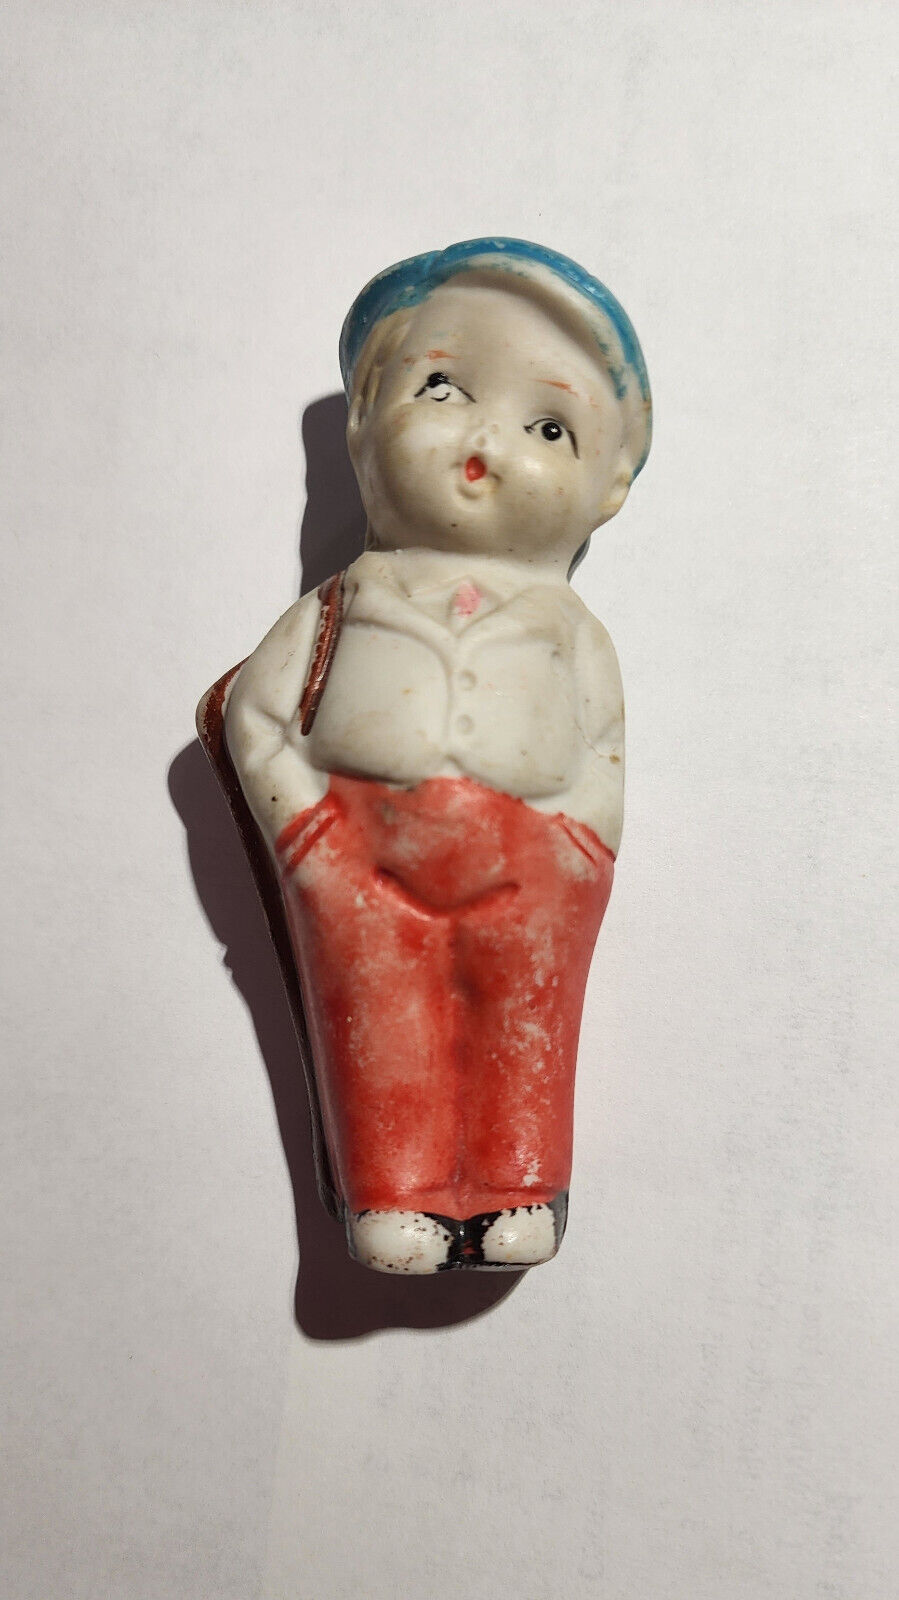 Vintage Hand Painted Porcelain Boy Figurine, Japan